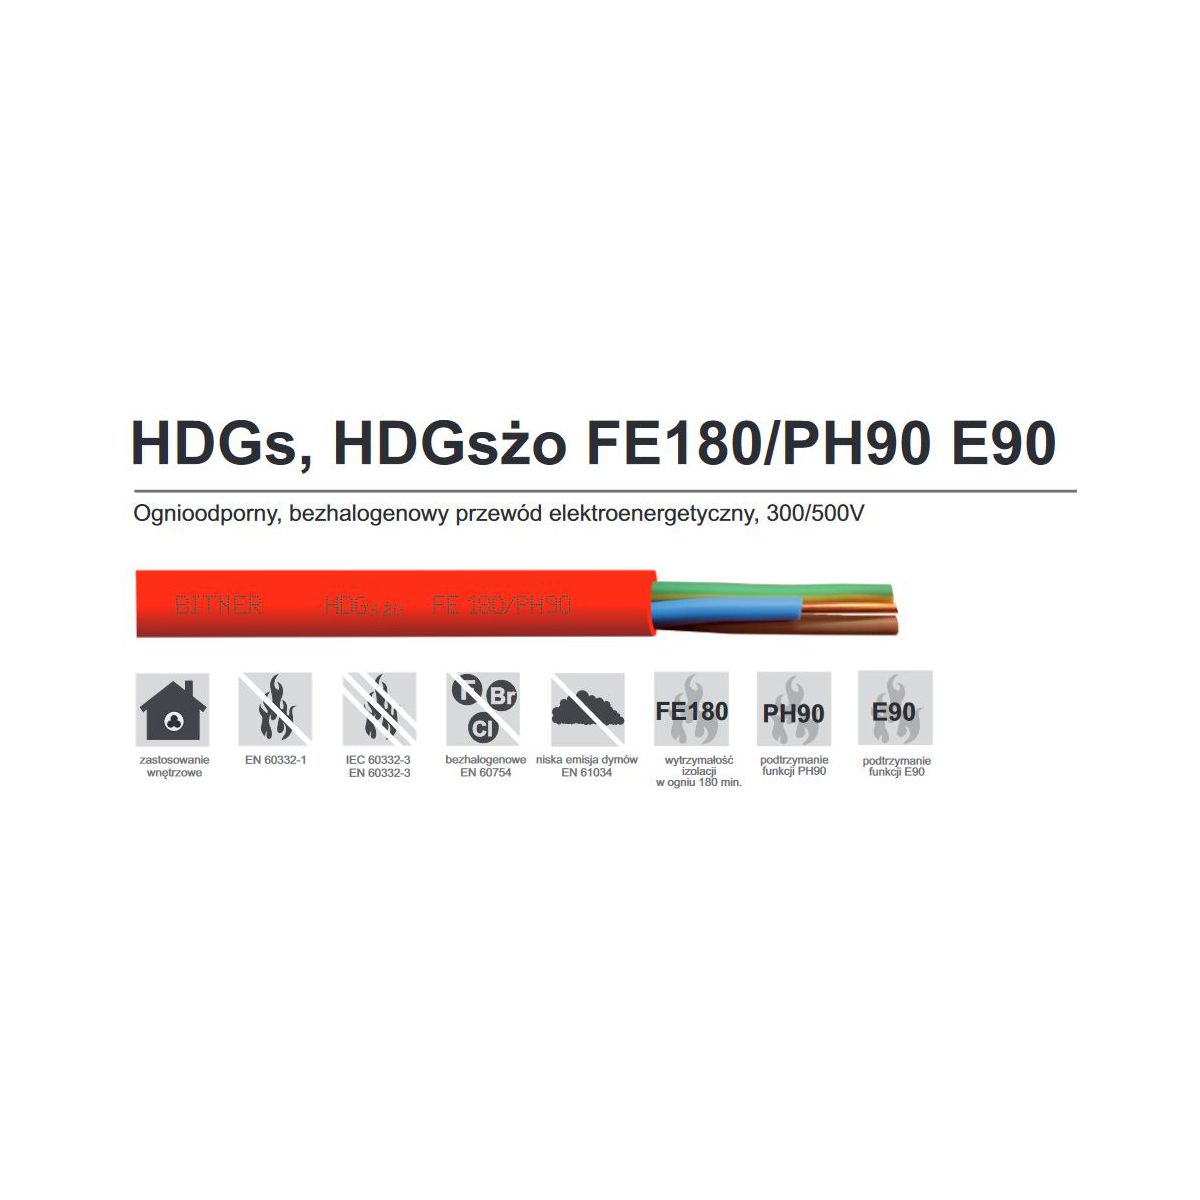 HDGs FE180/PH90 - kable ognioodporne